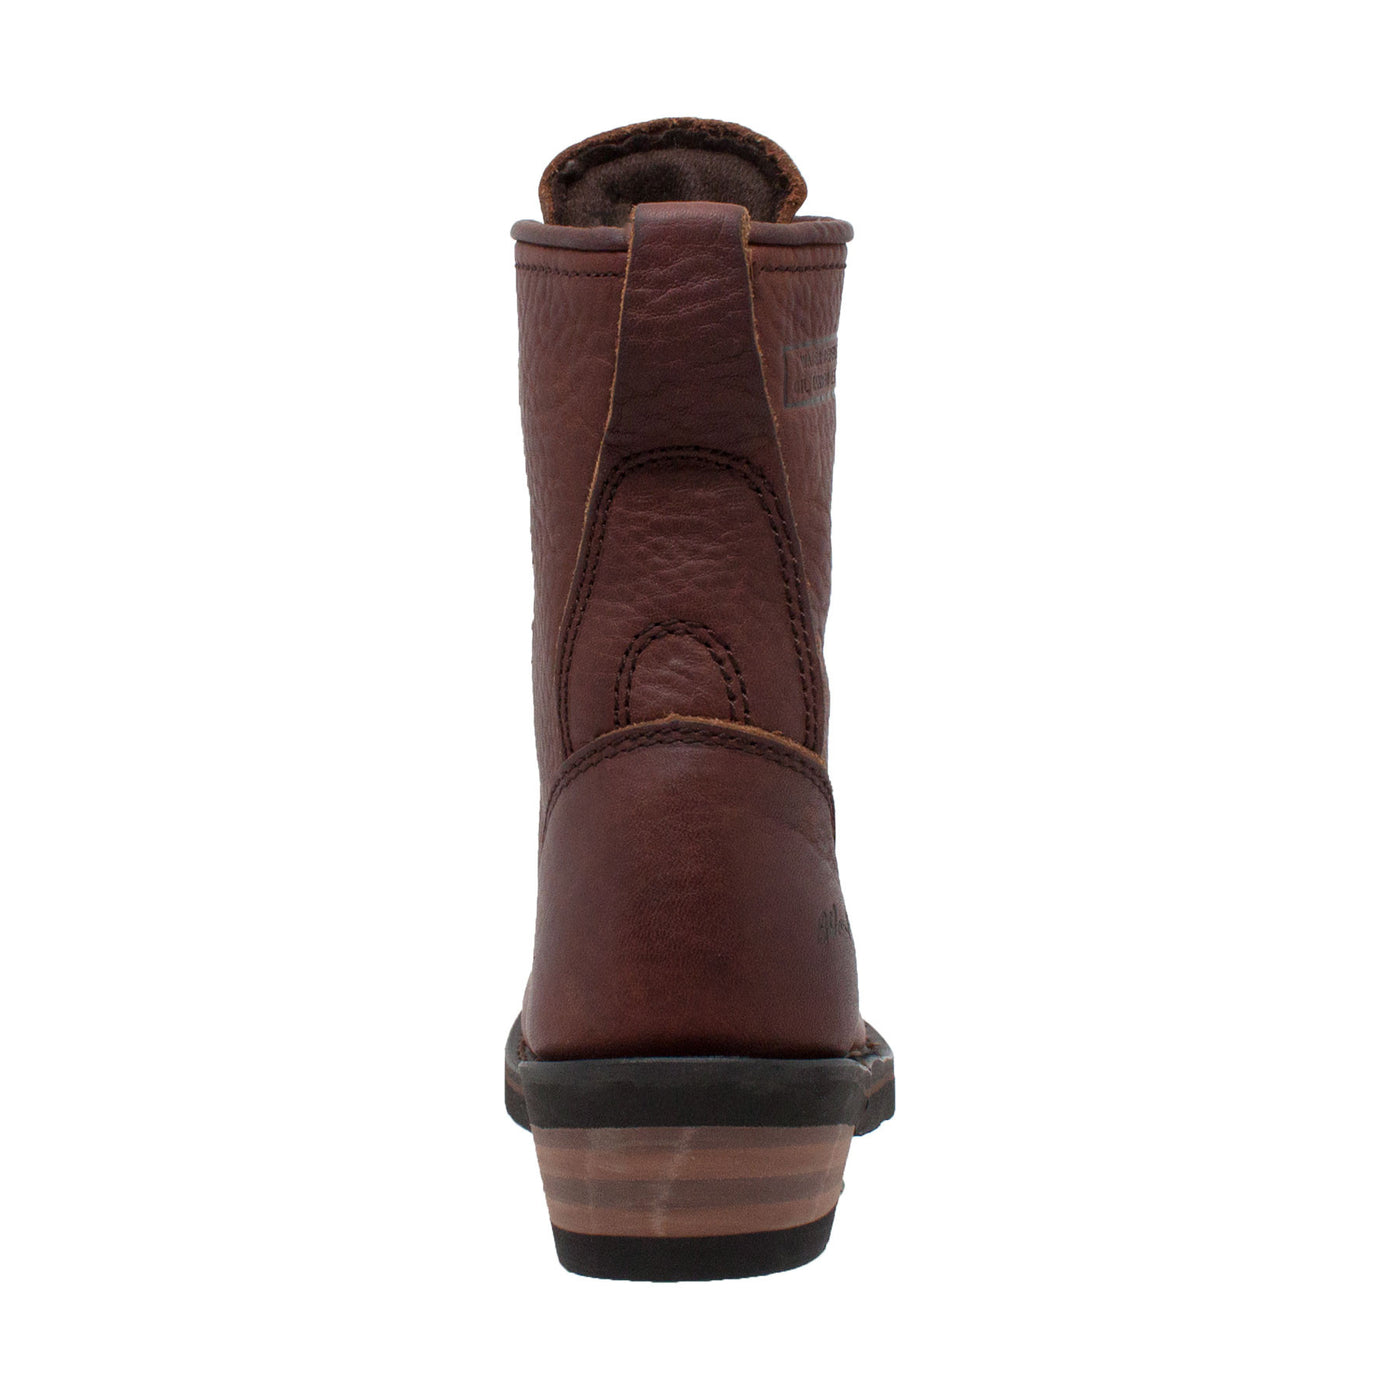 Children's Chestnut Packer - 4173 - Shop Genuine Leather men & women's boots online | AdTecFootWear